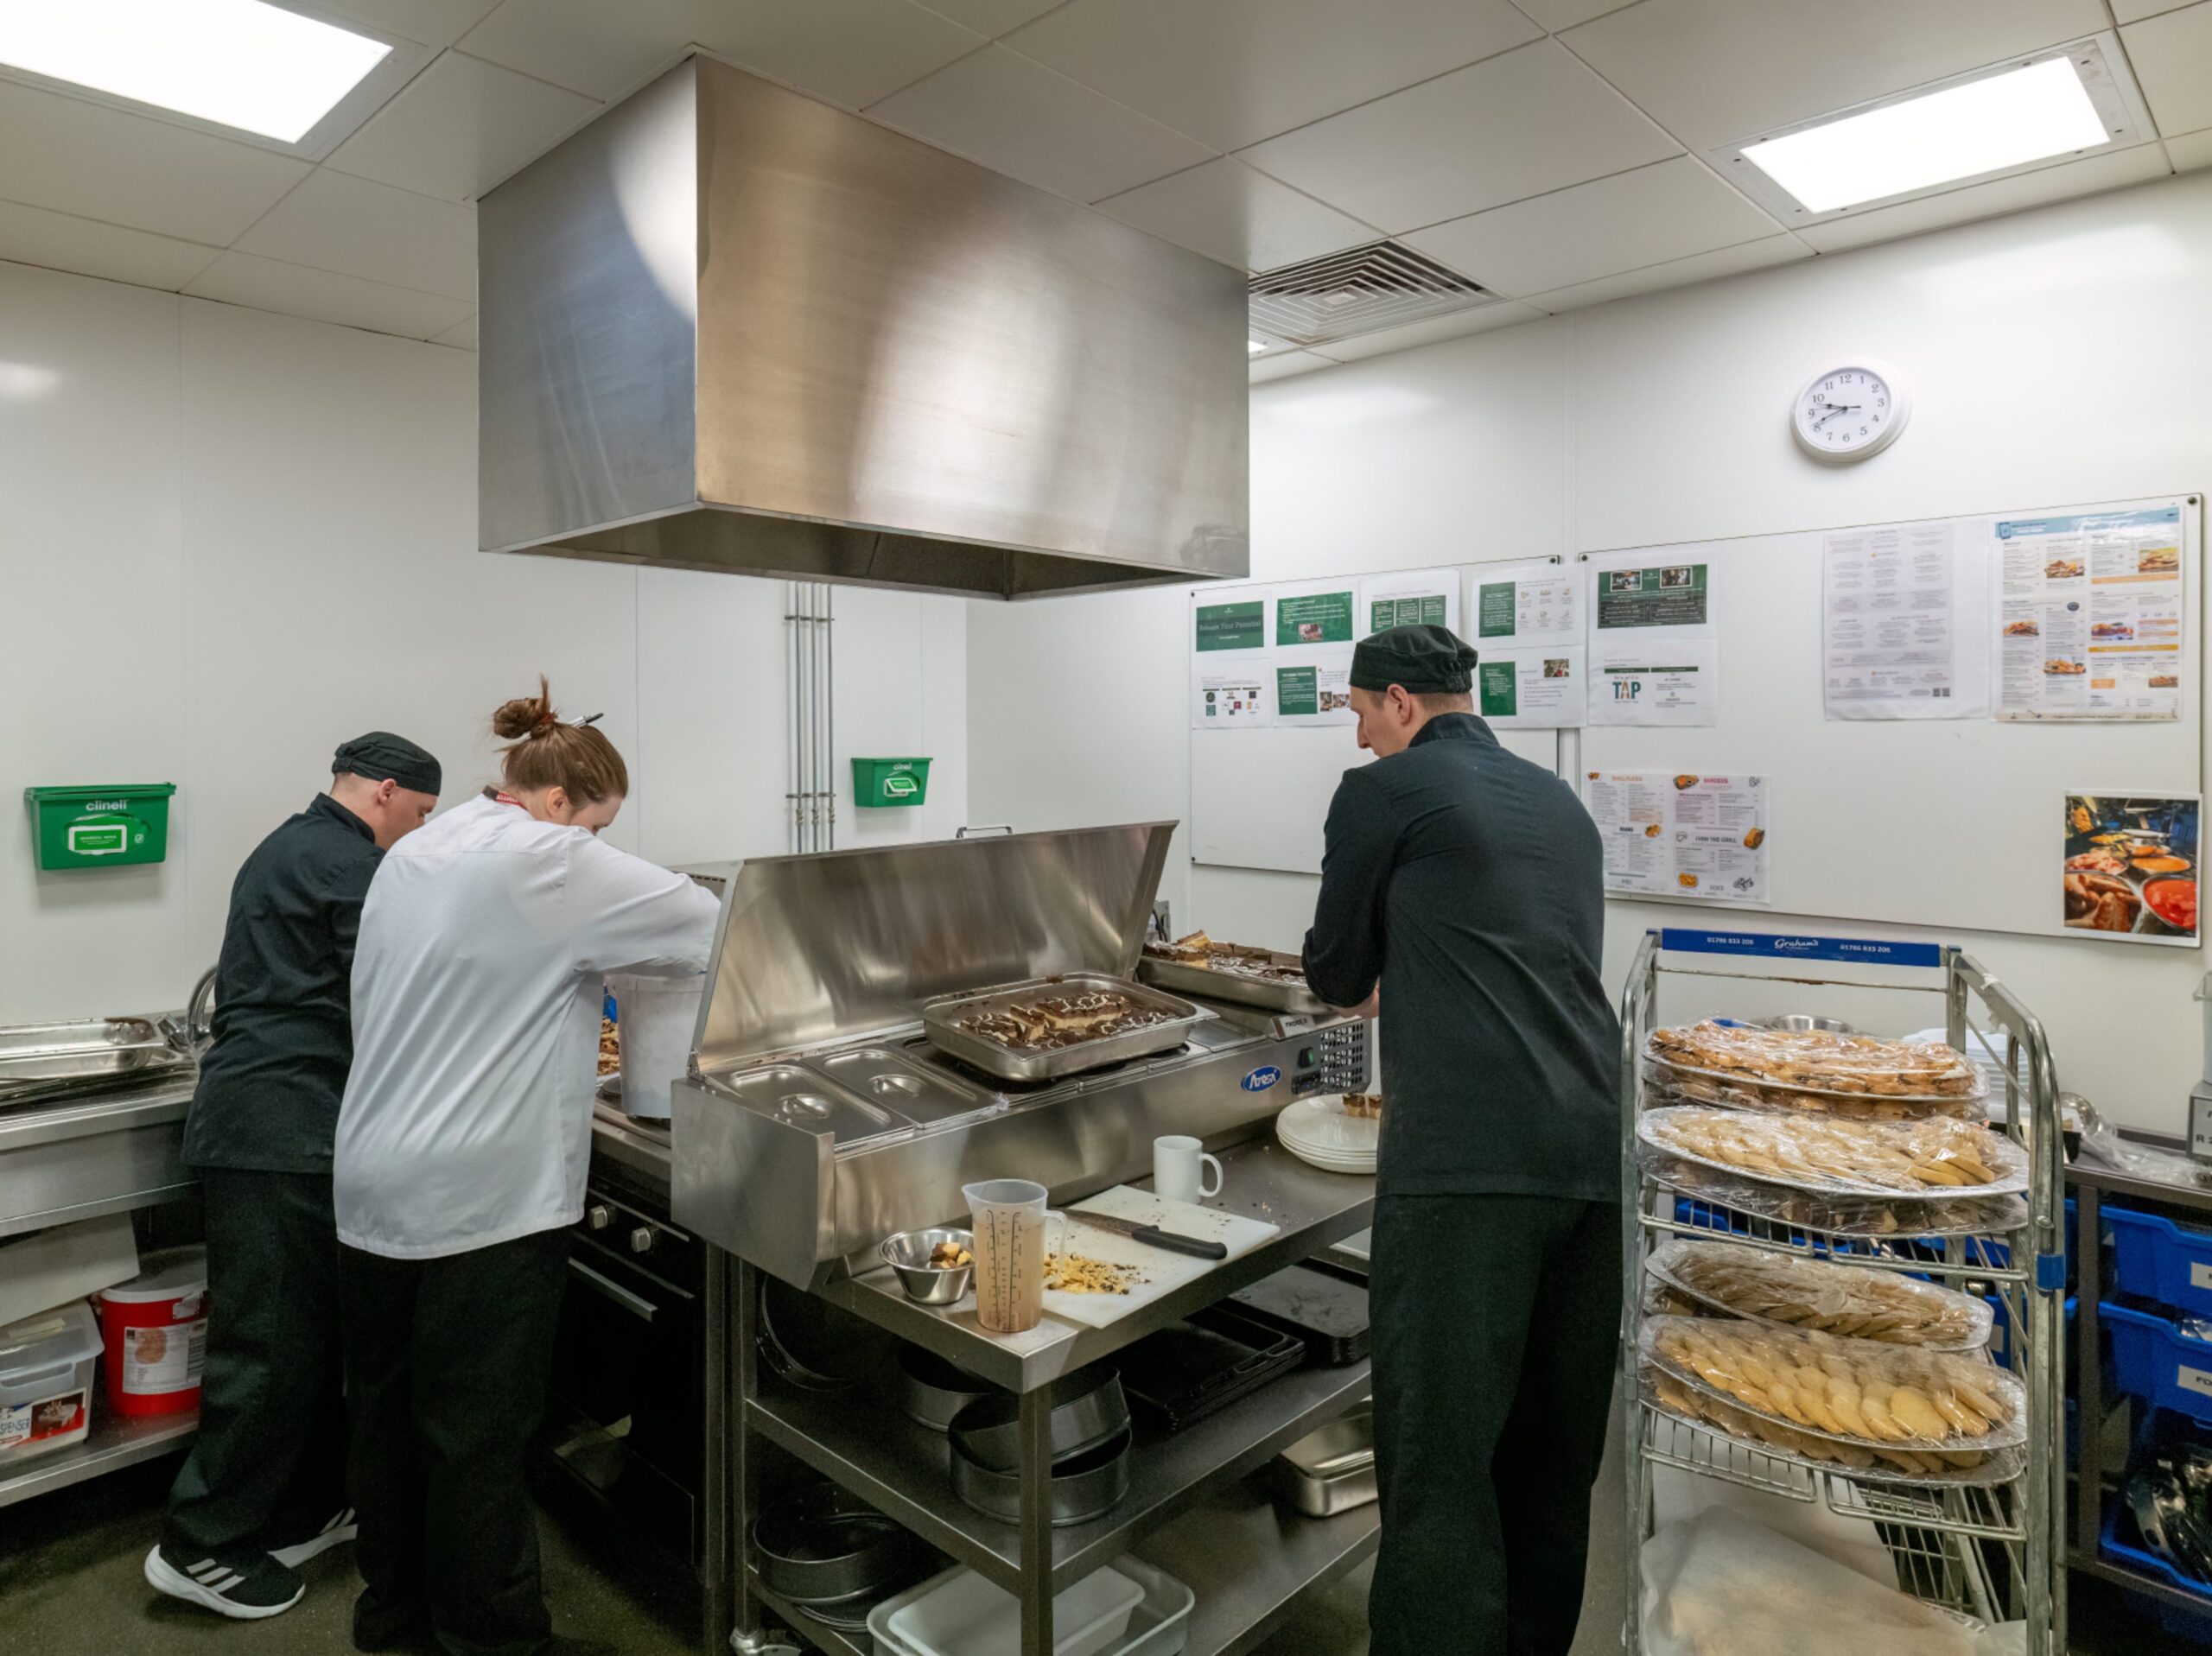 HMP Grampian prisoners working in a kitchen through the Greene King Training Academy job scheme